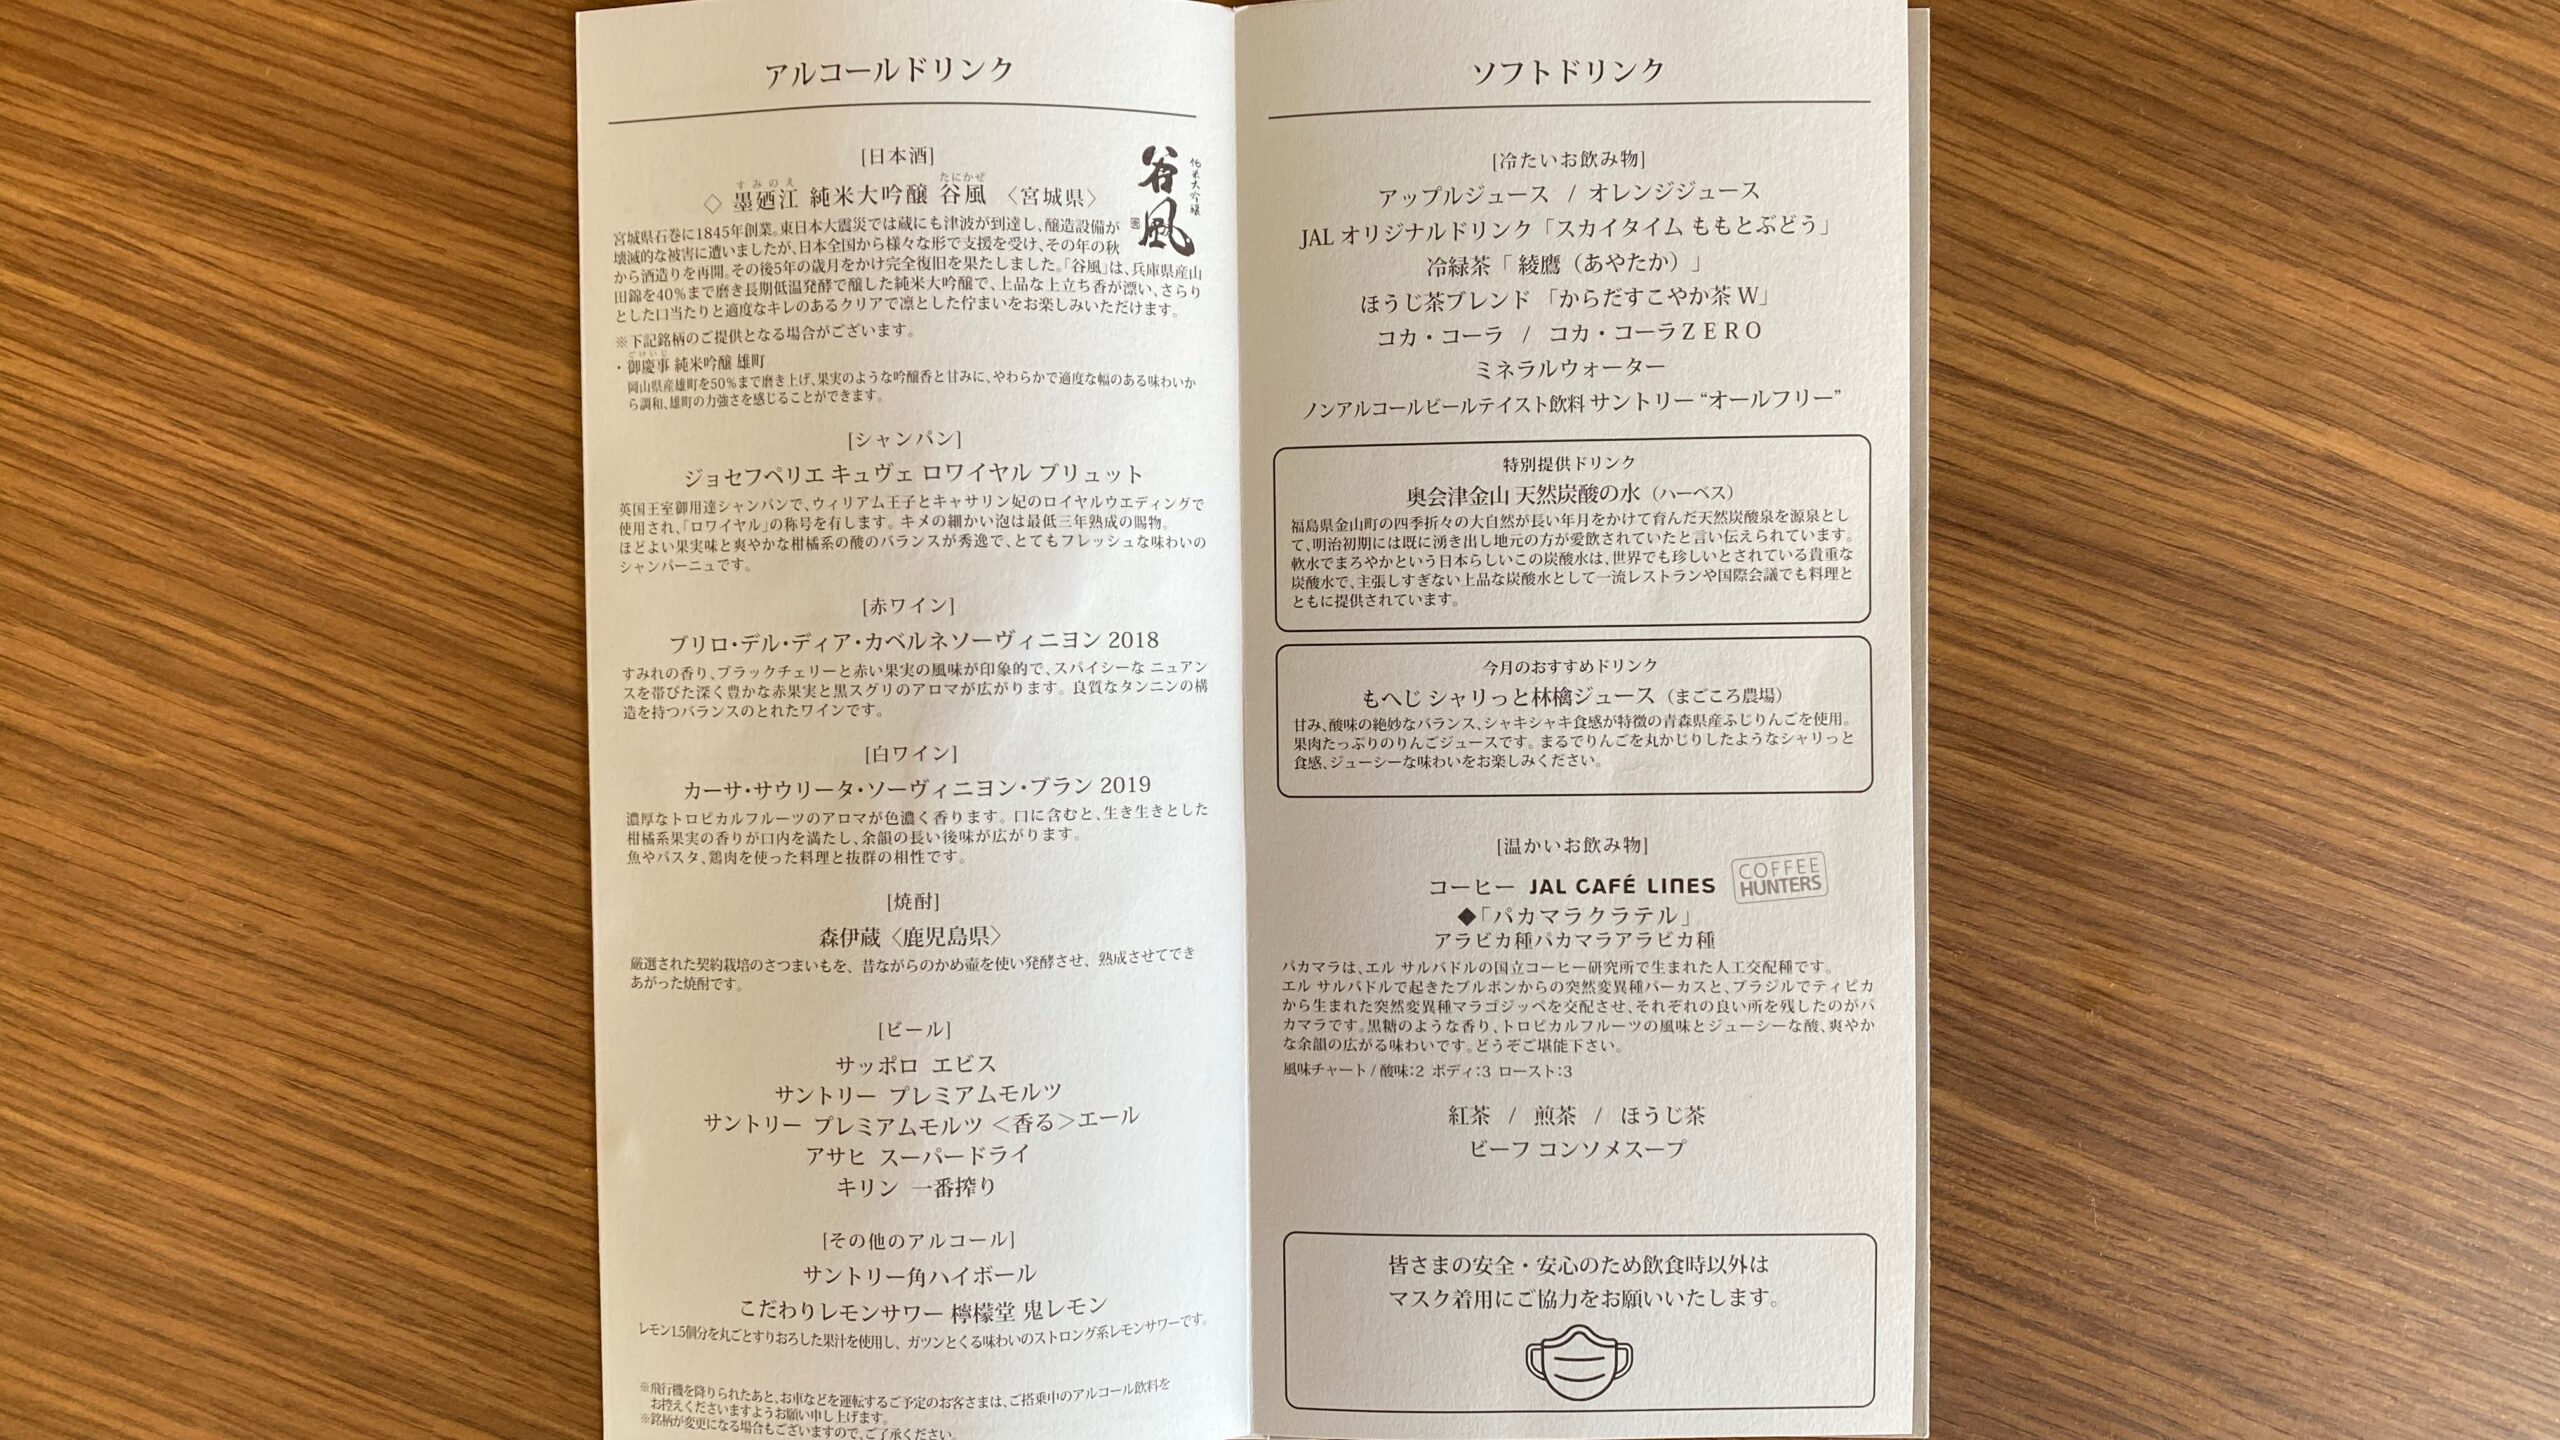 12APR21 JL127 羽田～伊丹 ファーストクラス 機内食